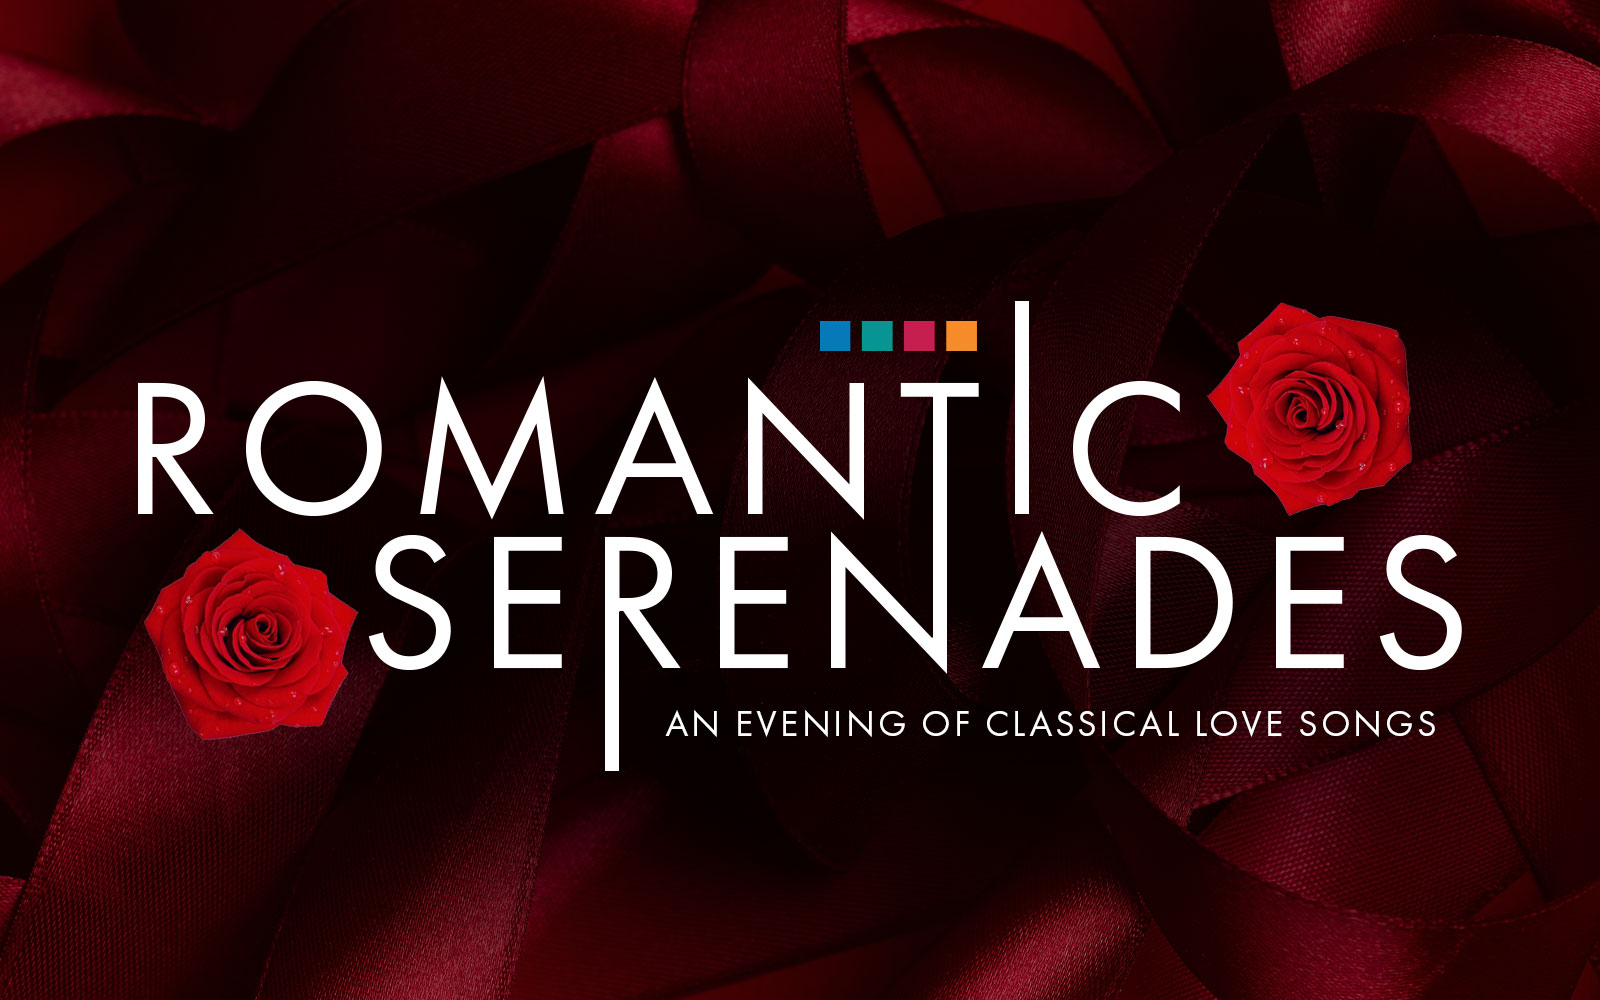 Maryland Symphony Orchestra Presents “Romantic Serenades”